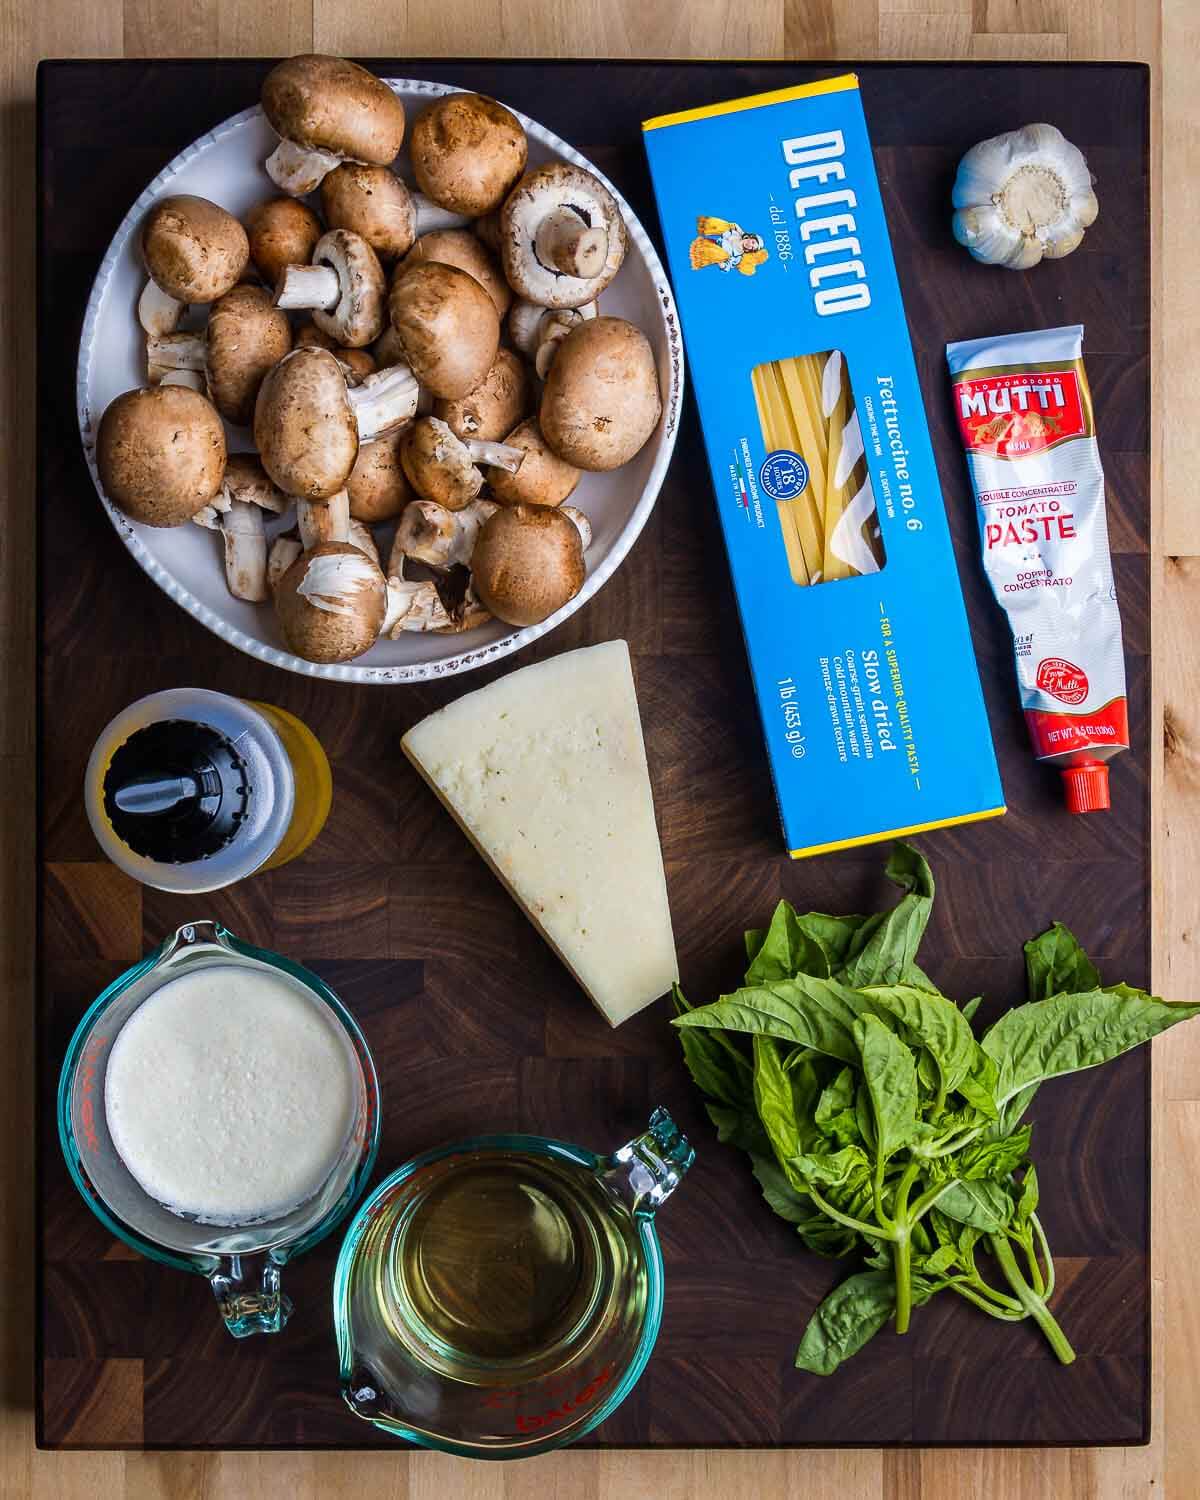 Ingredients shown: mushrooms, fettuccine, garlic, tomato paste, olive oil, Pecorino, heavy cream, white wine, and basil.